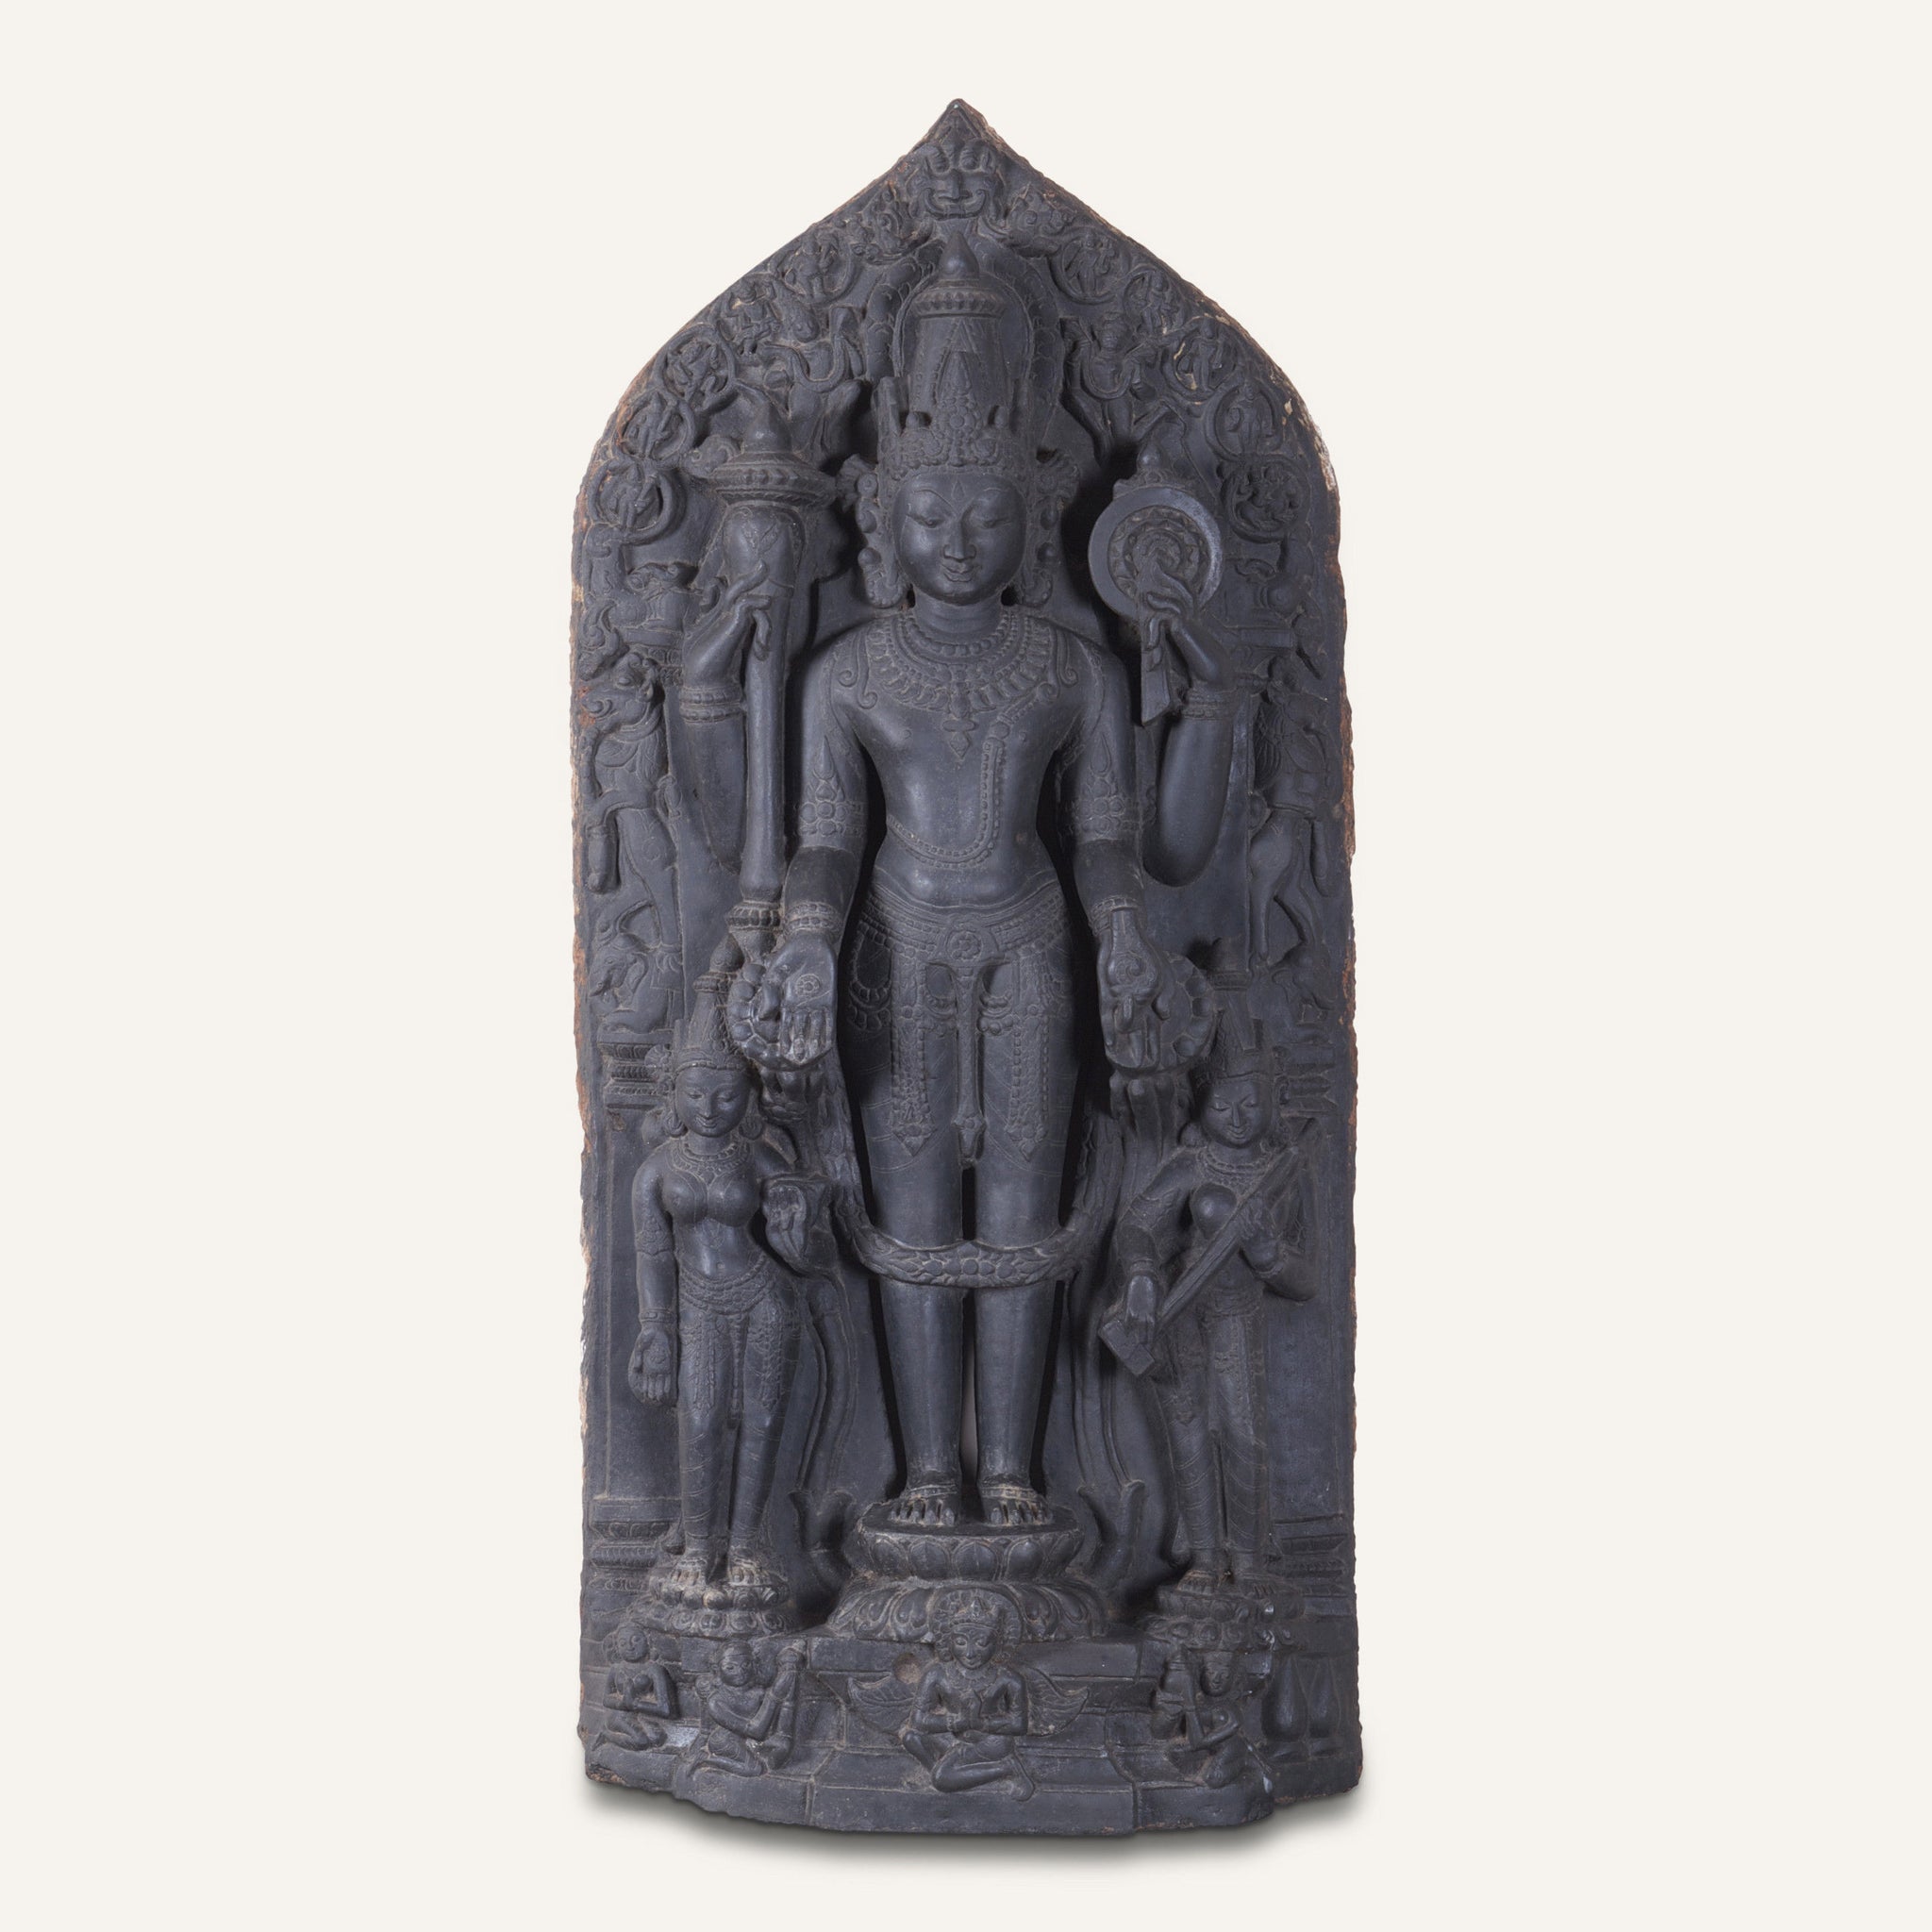 Carved Black Basalt Stele of Vishnu, North Eastern India, Pala Period.  11th or 12th Century